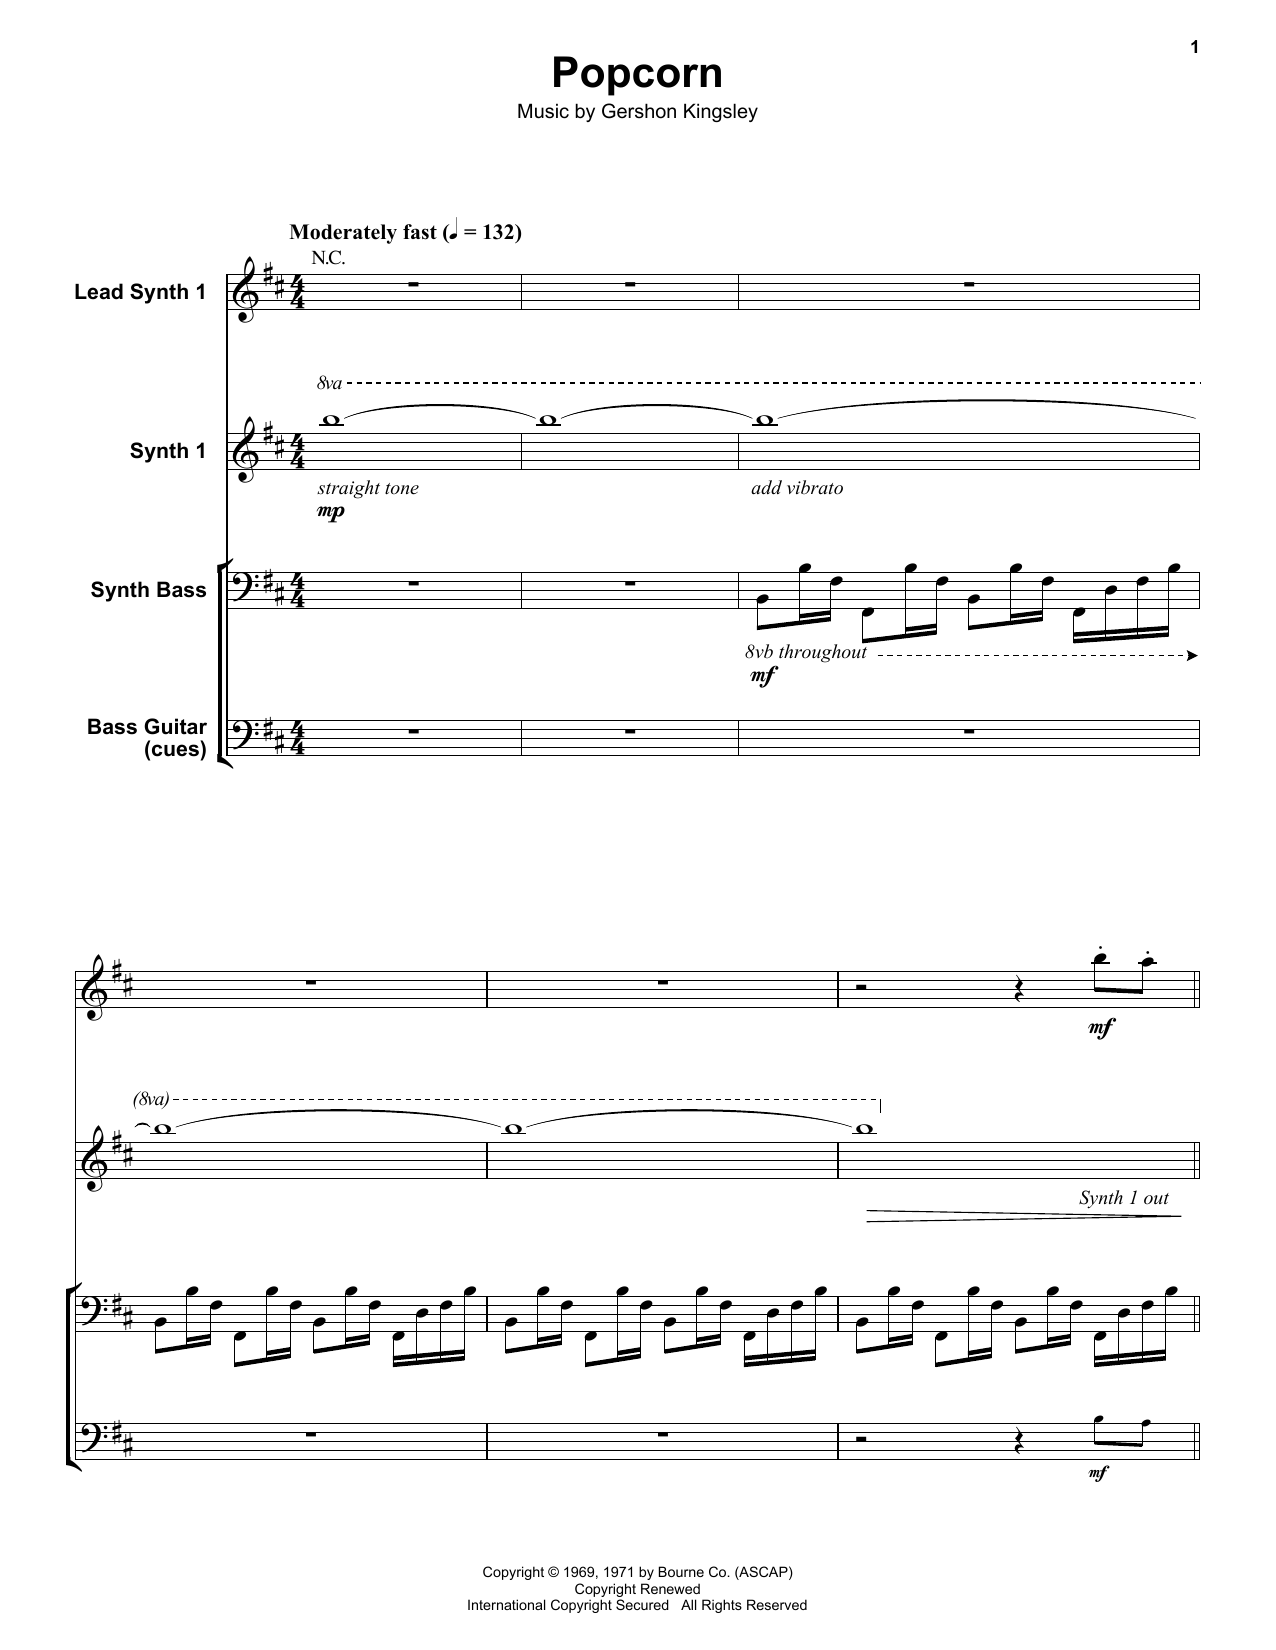 Gershon Kingsley Popcorn Sheet Music Notes & Chords for Melody Line, Lyrics & Chords - Download or Print PDF